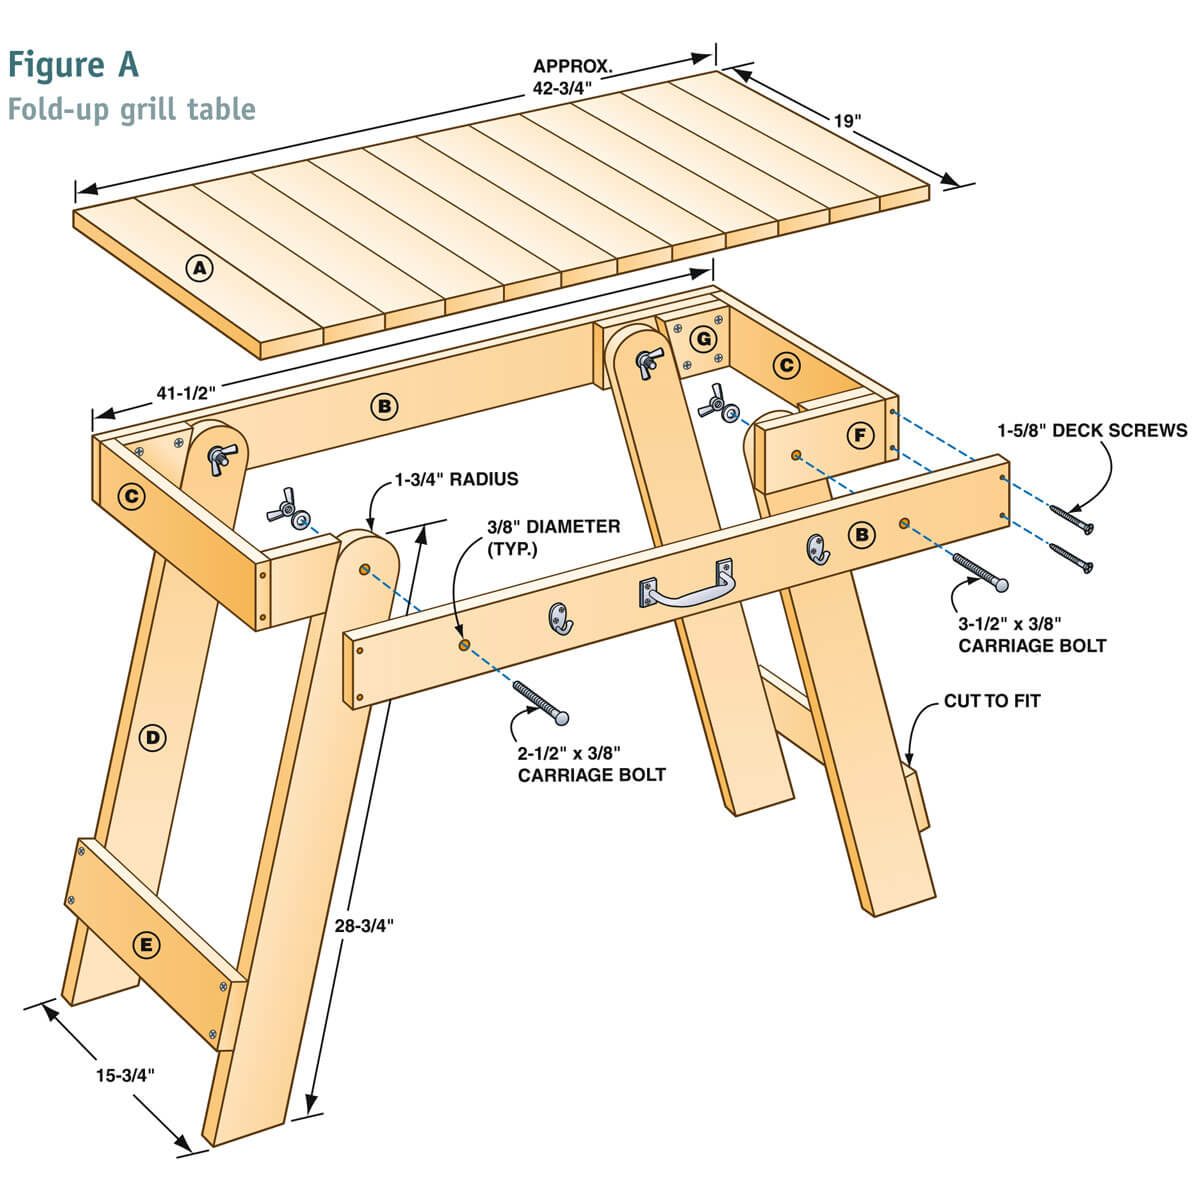 Transportable Fold-Up Grill Table (Diy) | Family Handyman